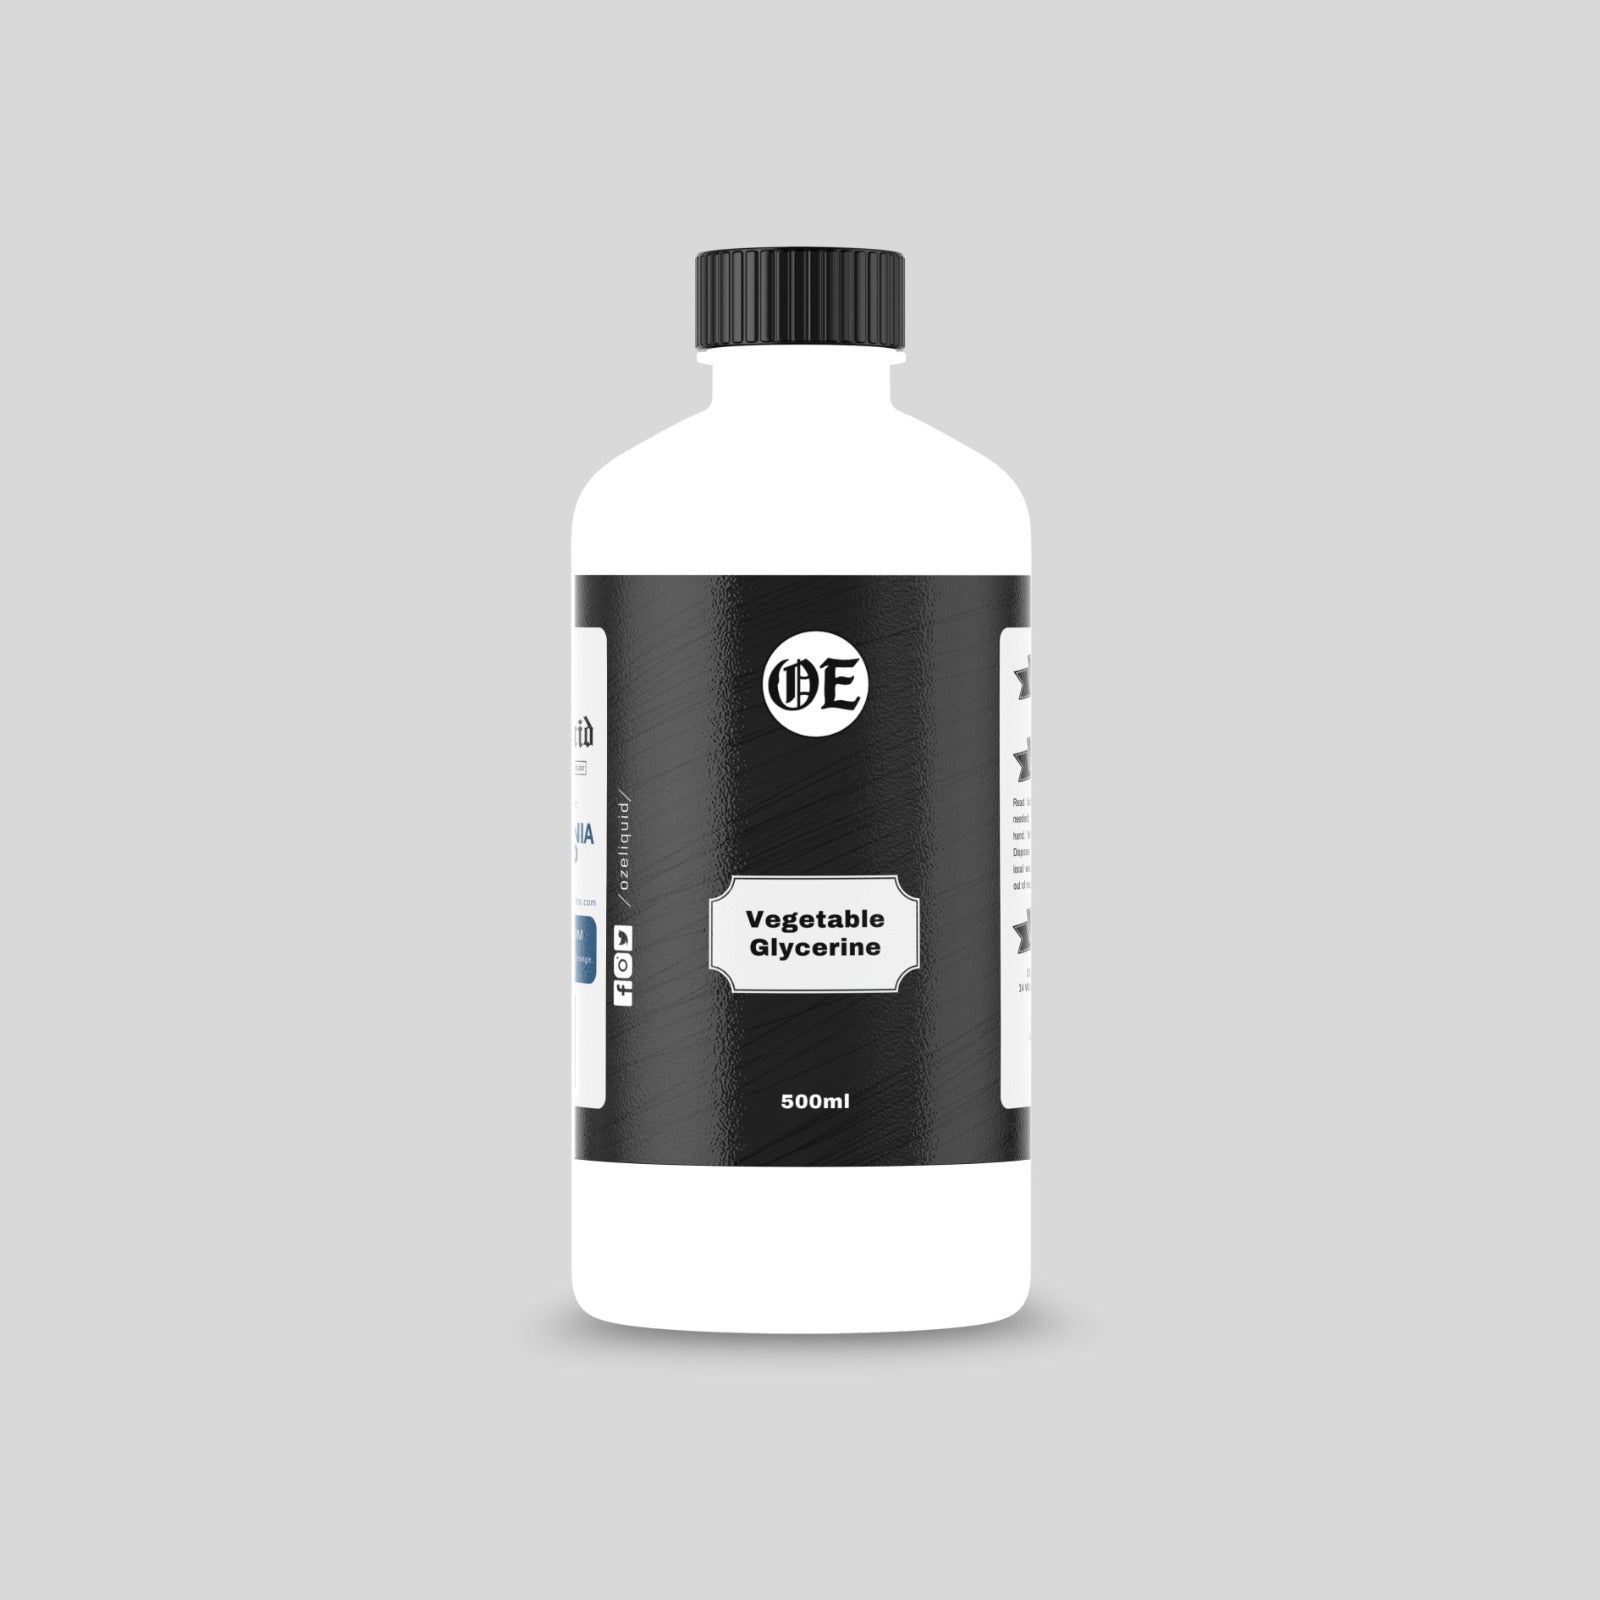 Propylene Glycol | Australia wholesale